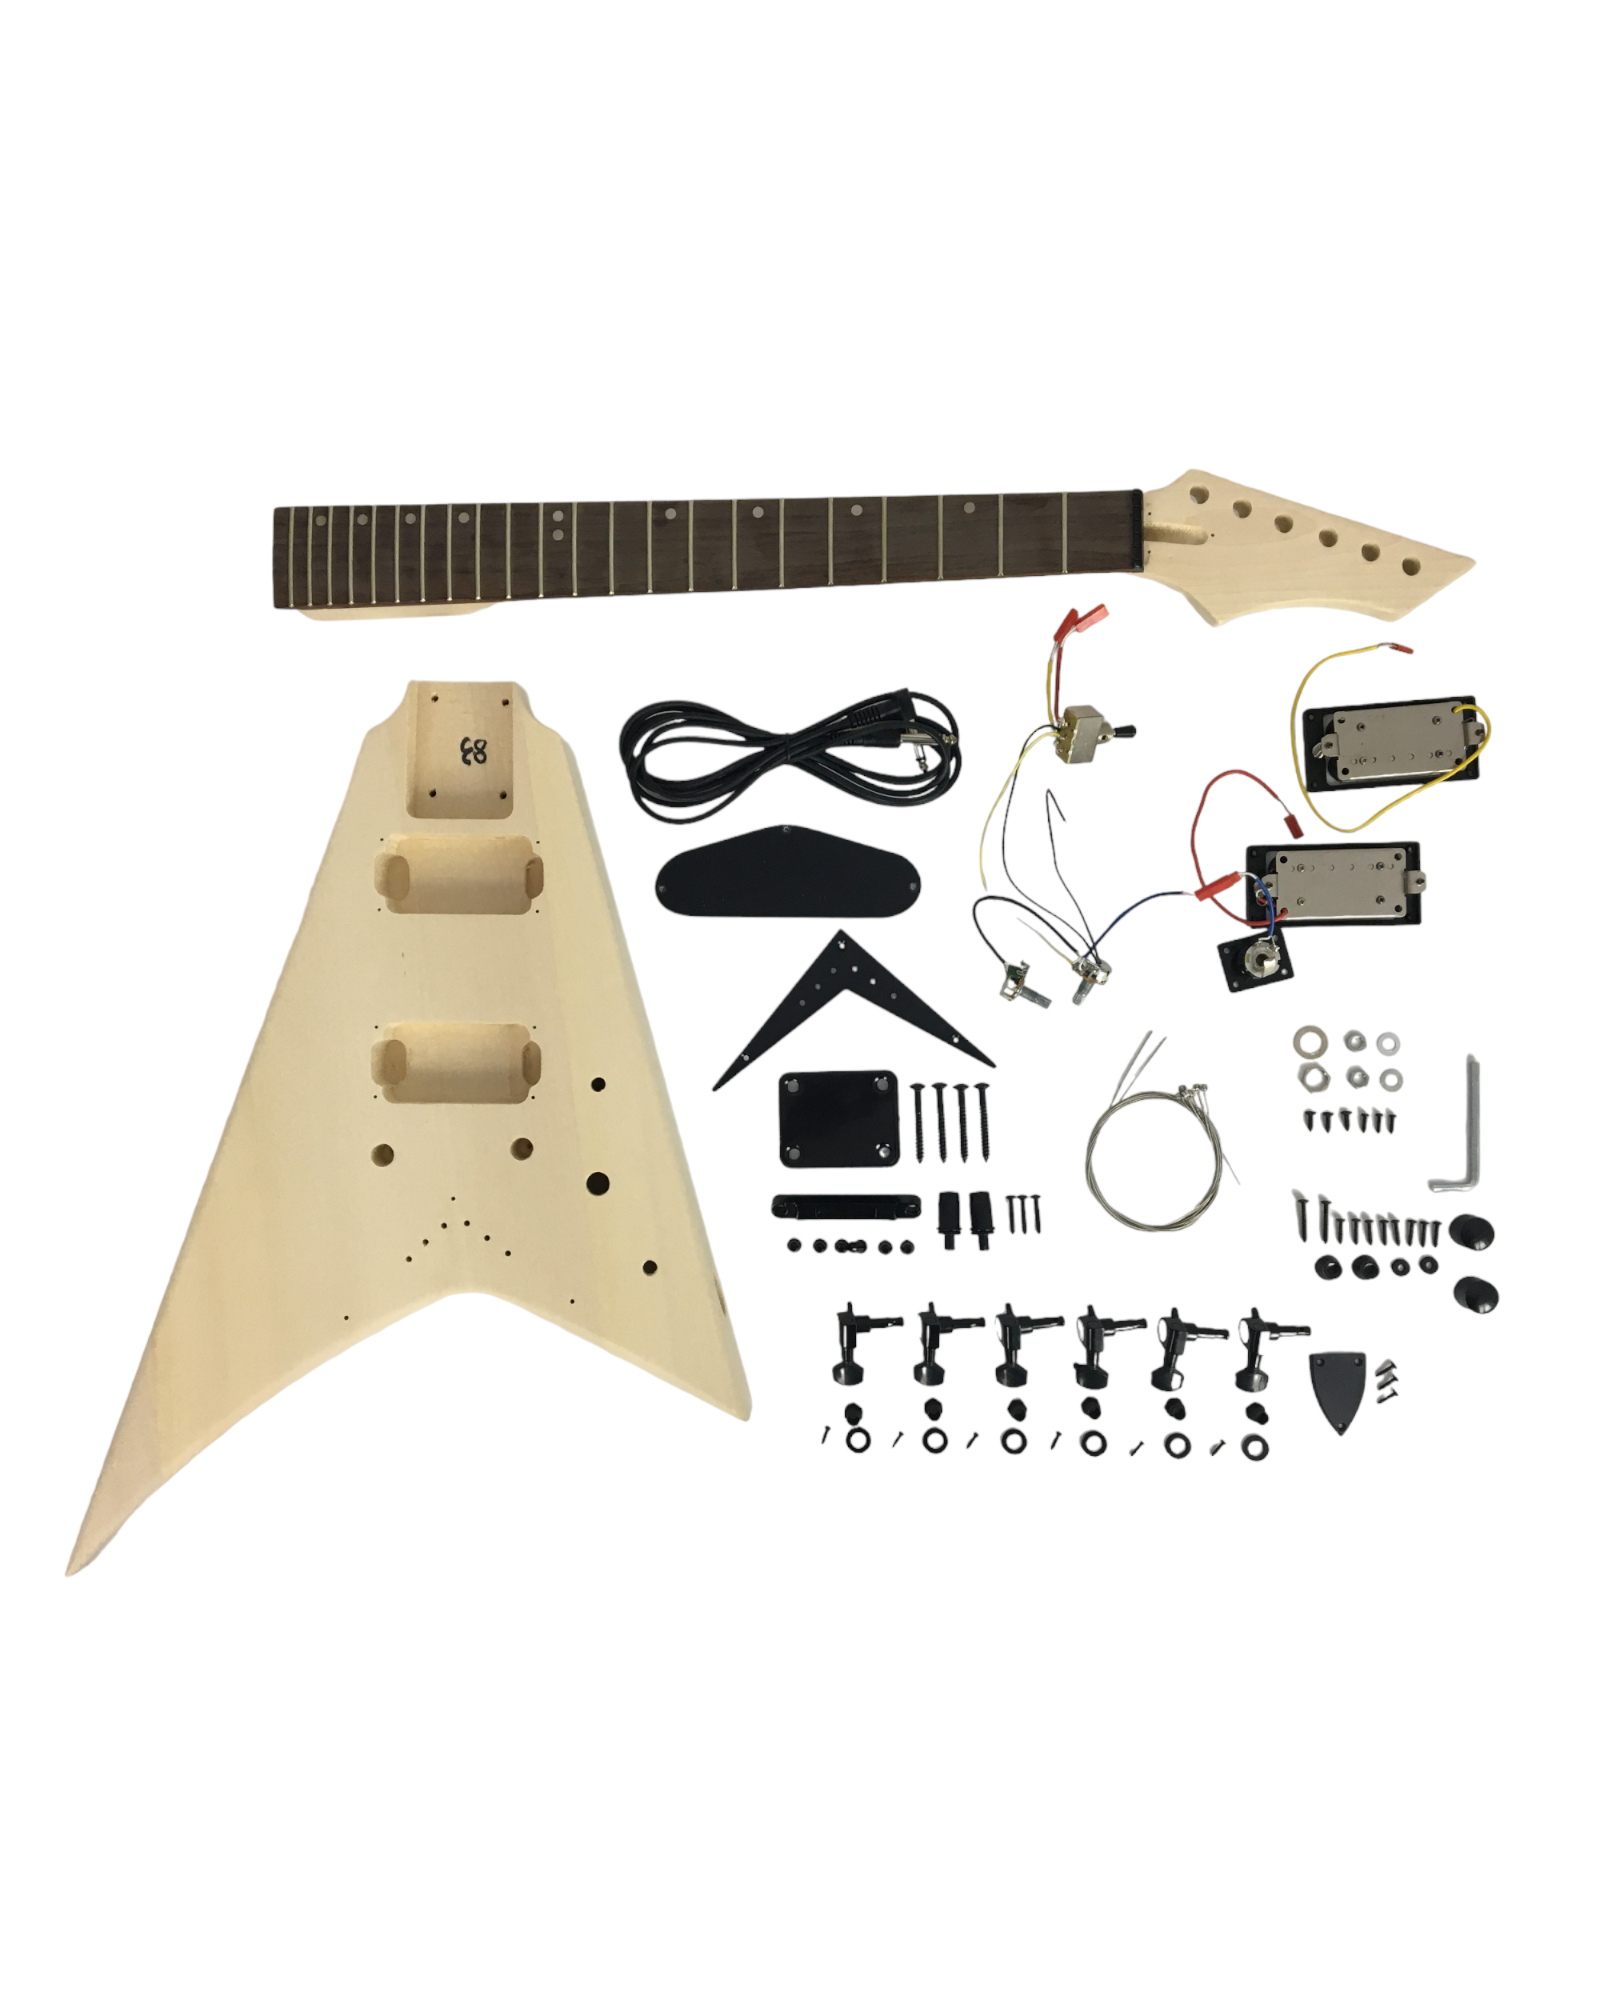 HSFV1950BHDIY Solid Basswood Body Electric Guitar DIY Kit, No-Solderin –  Kookaburra Music Tree